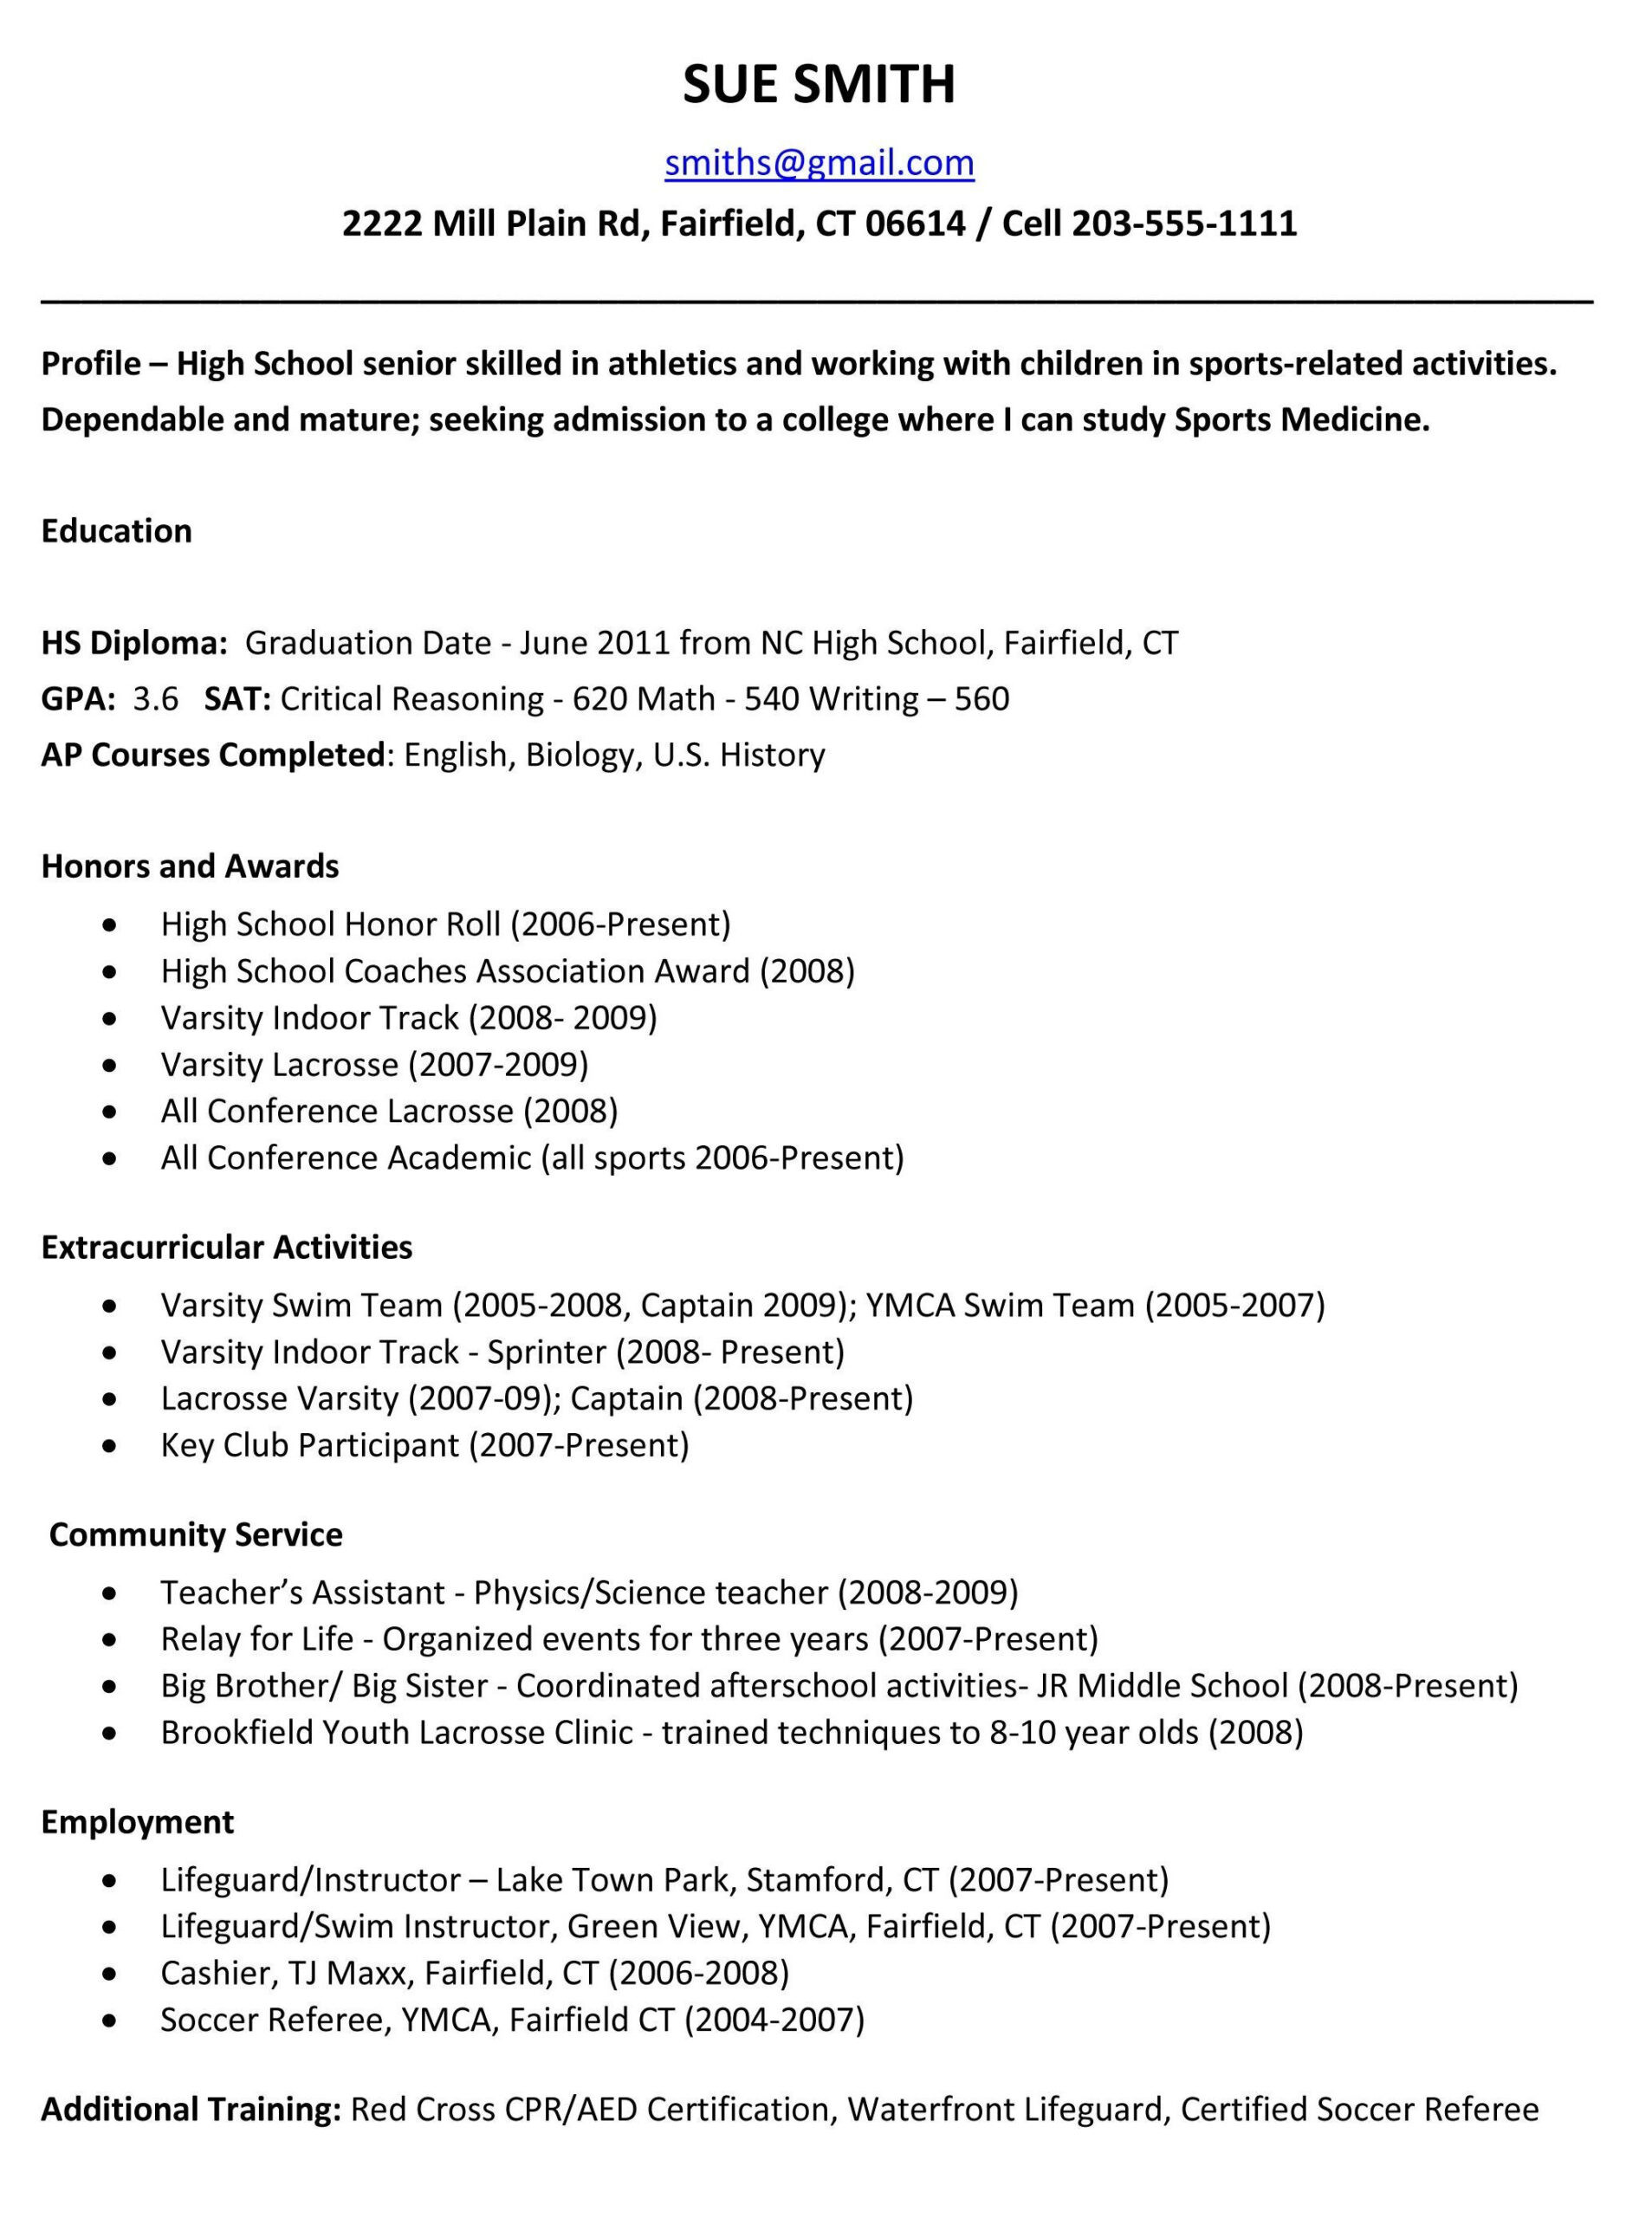 sample resume summary for high school student